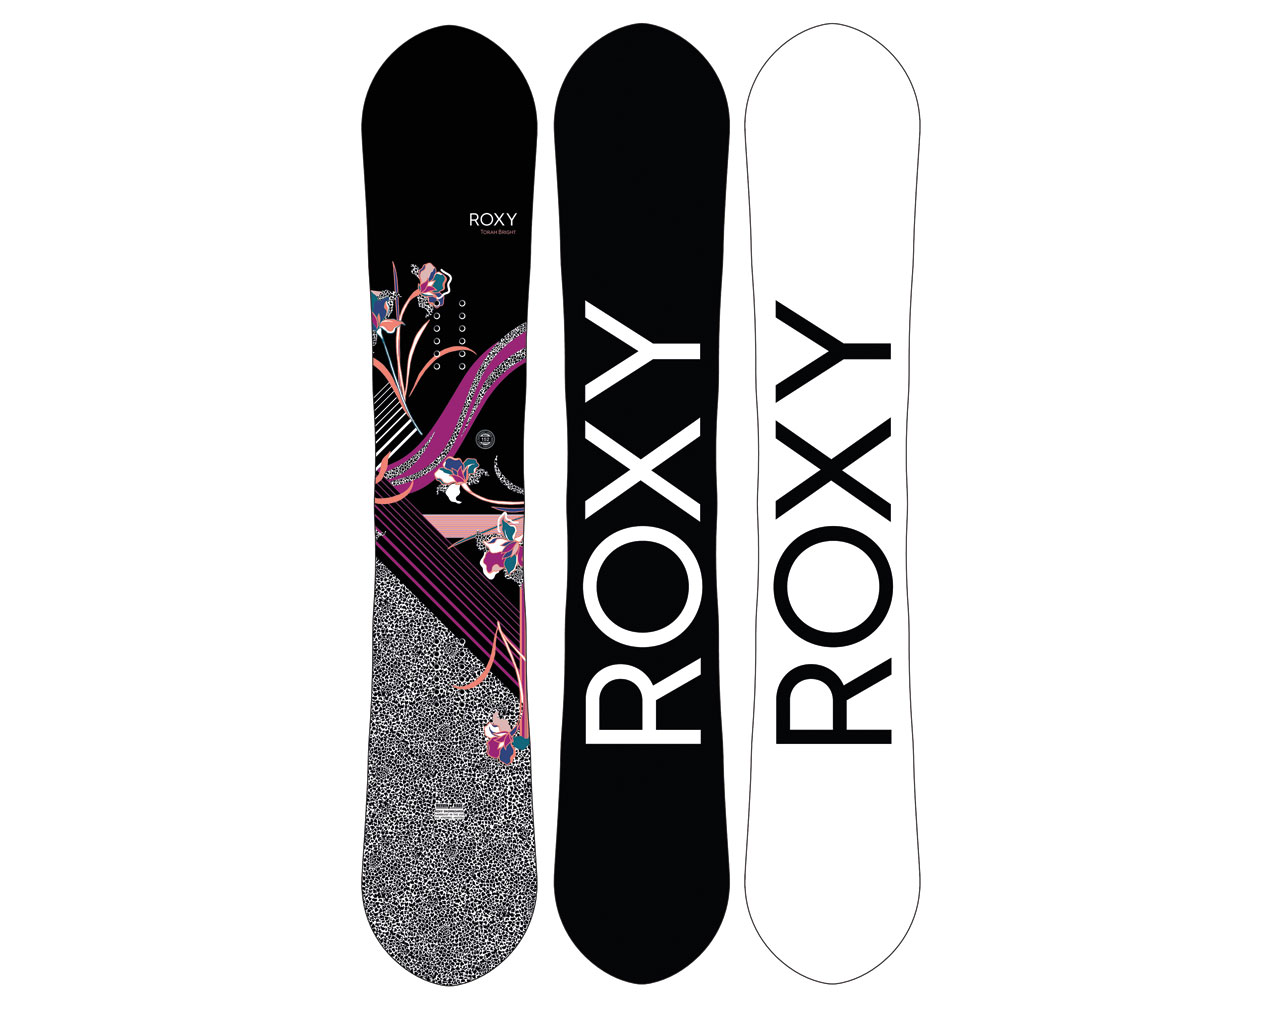 Roxy FW20/21 Snowboard Preview